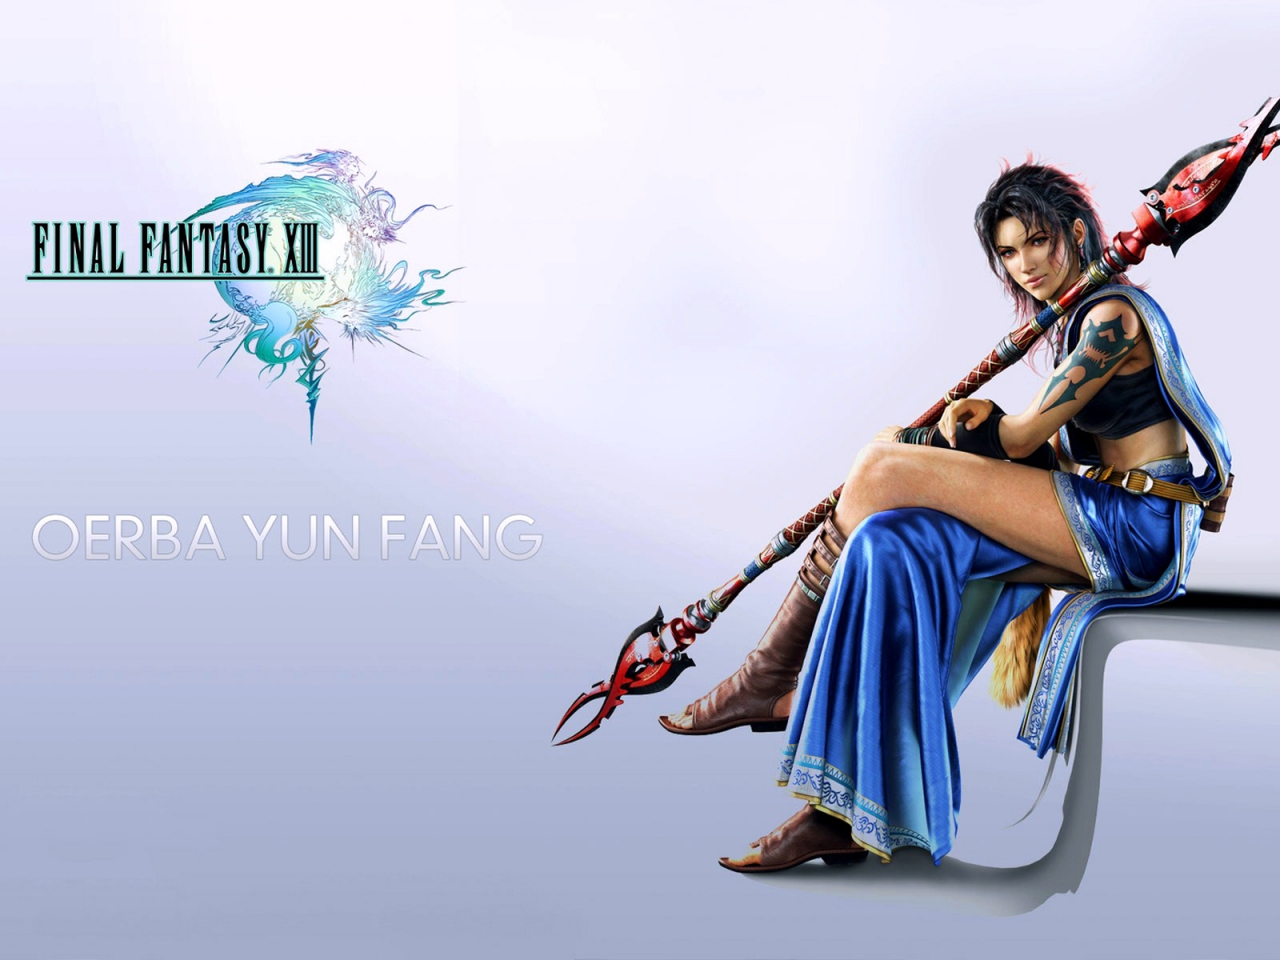 Final Fantasy XIII Oerba Yun Fang for 1280 x 960 resolution